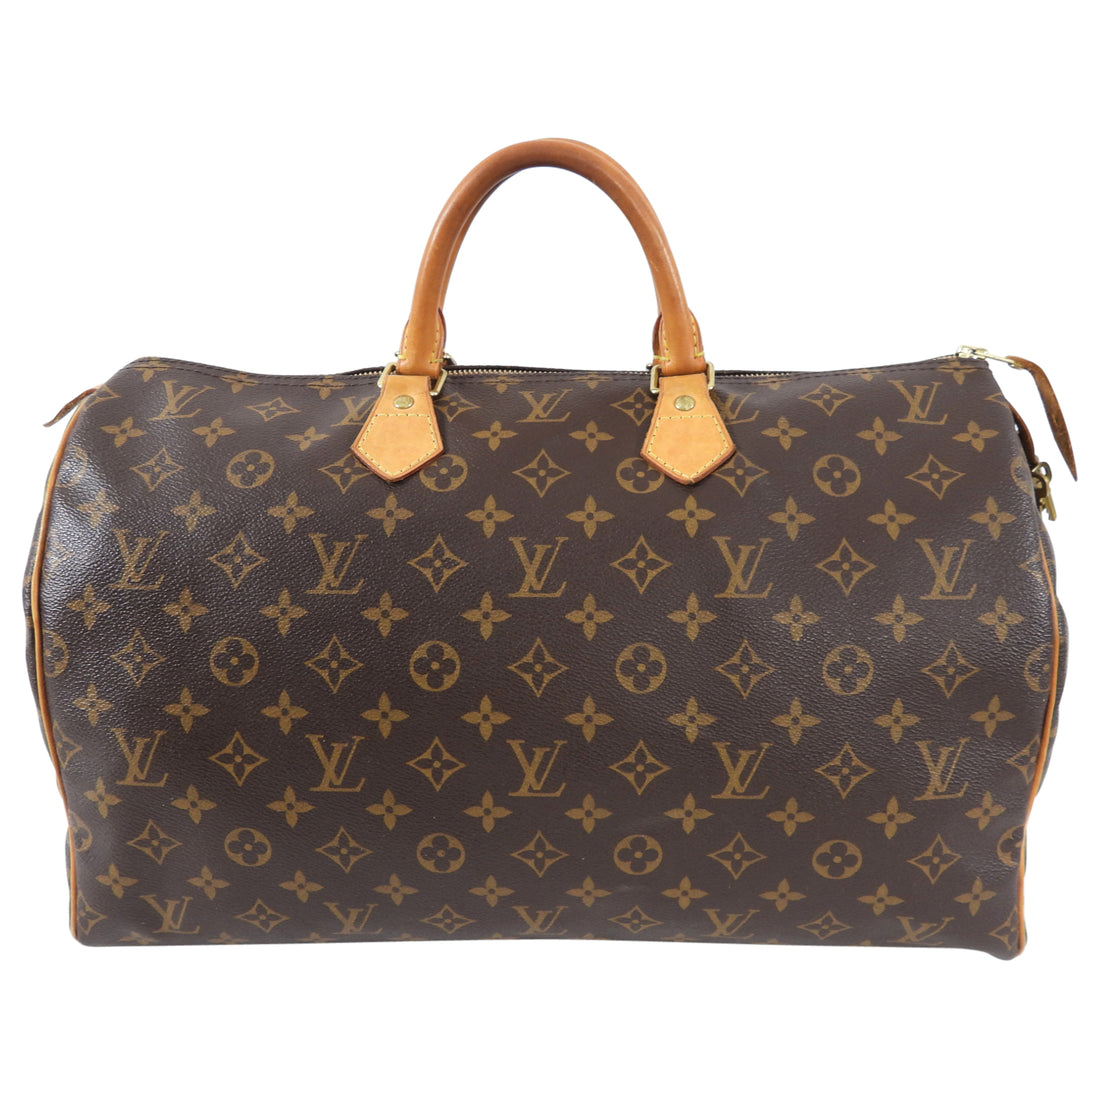 Louis Vuitton Monogram Canvas Keepall 40 Speedy Duffle Bag